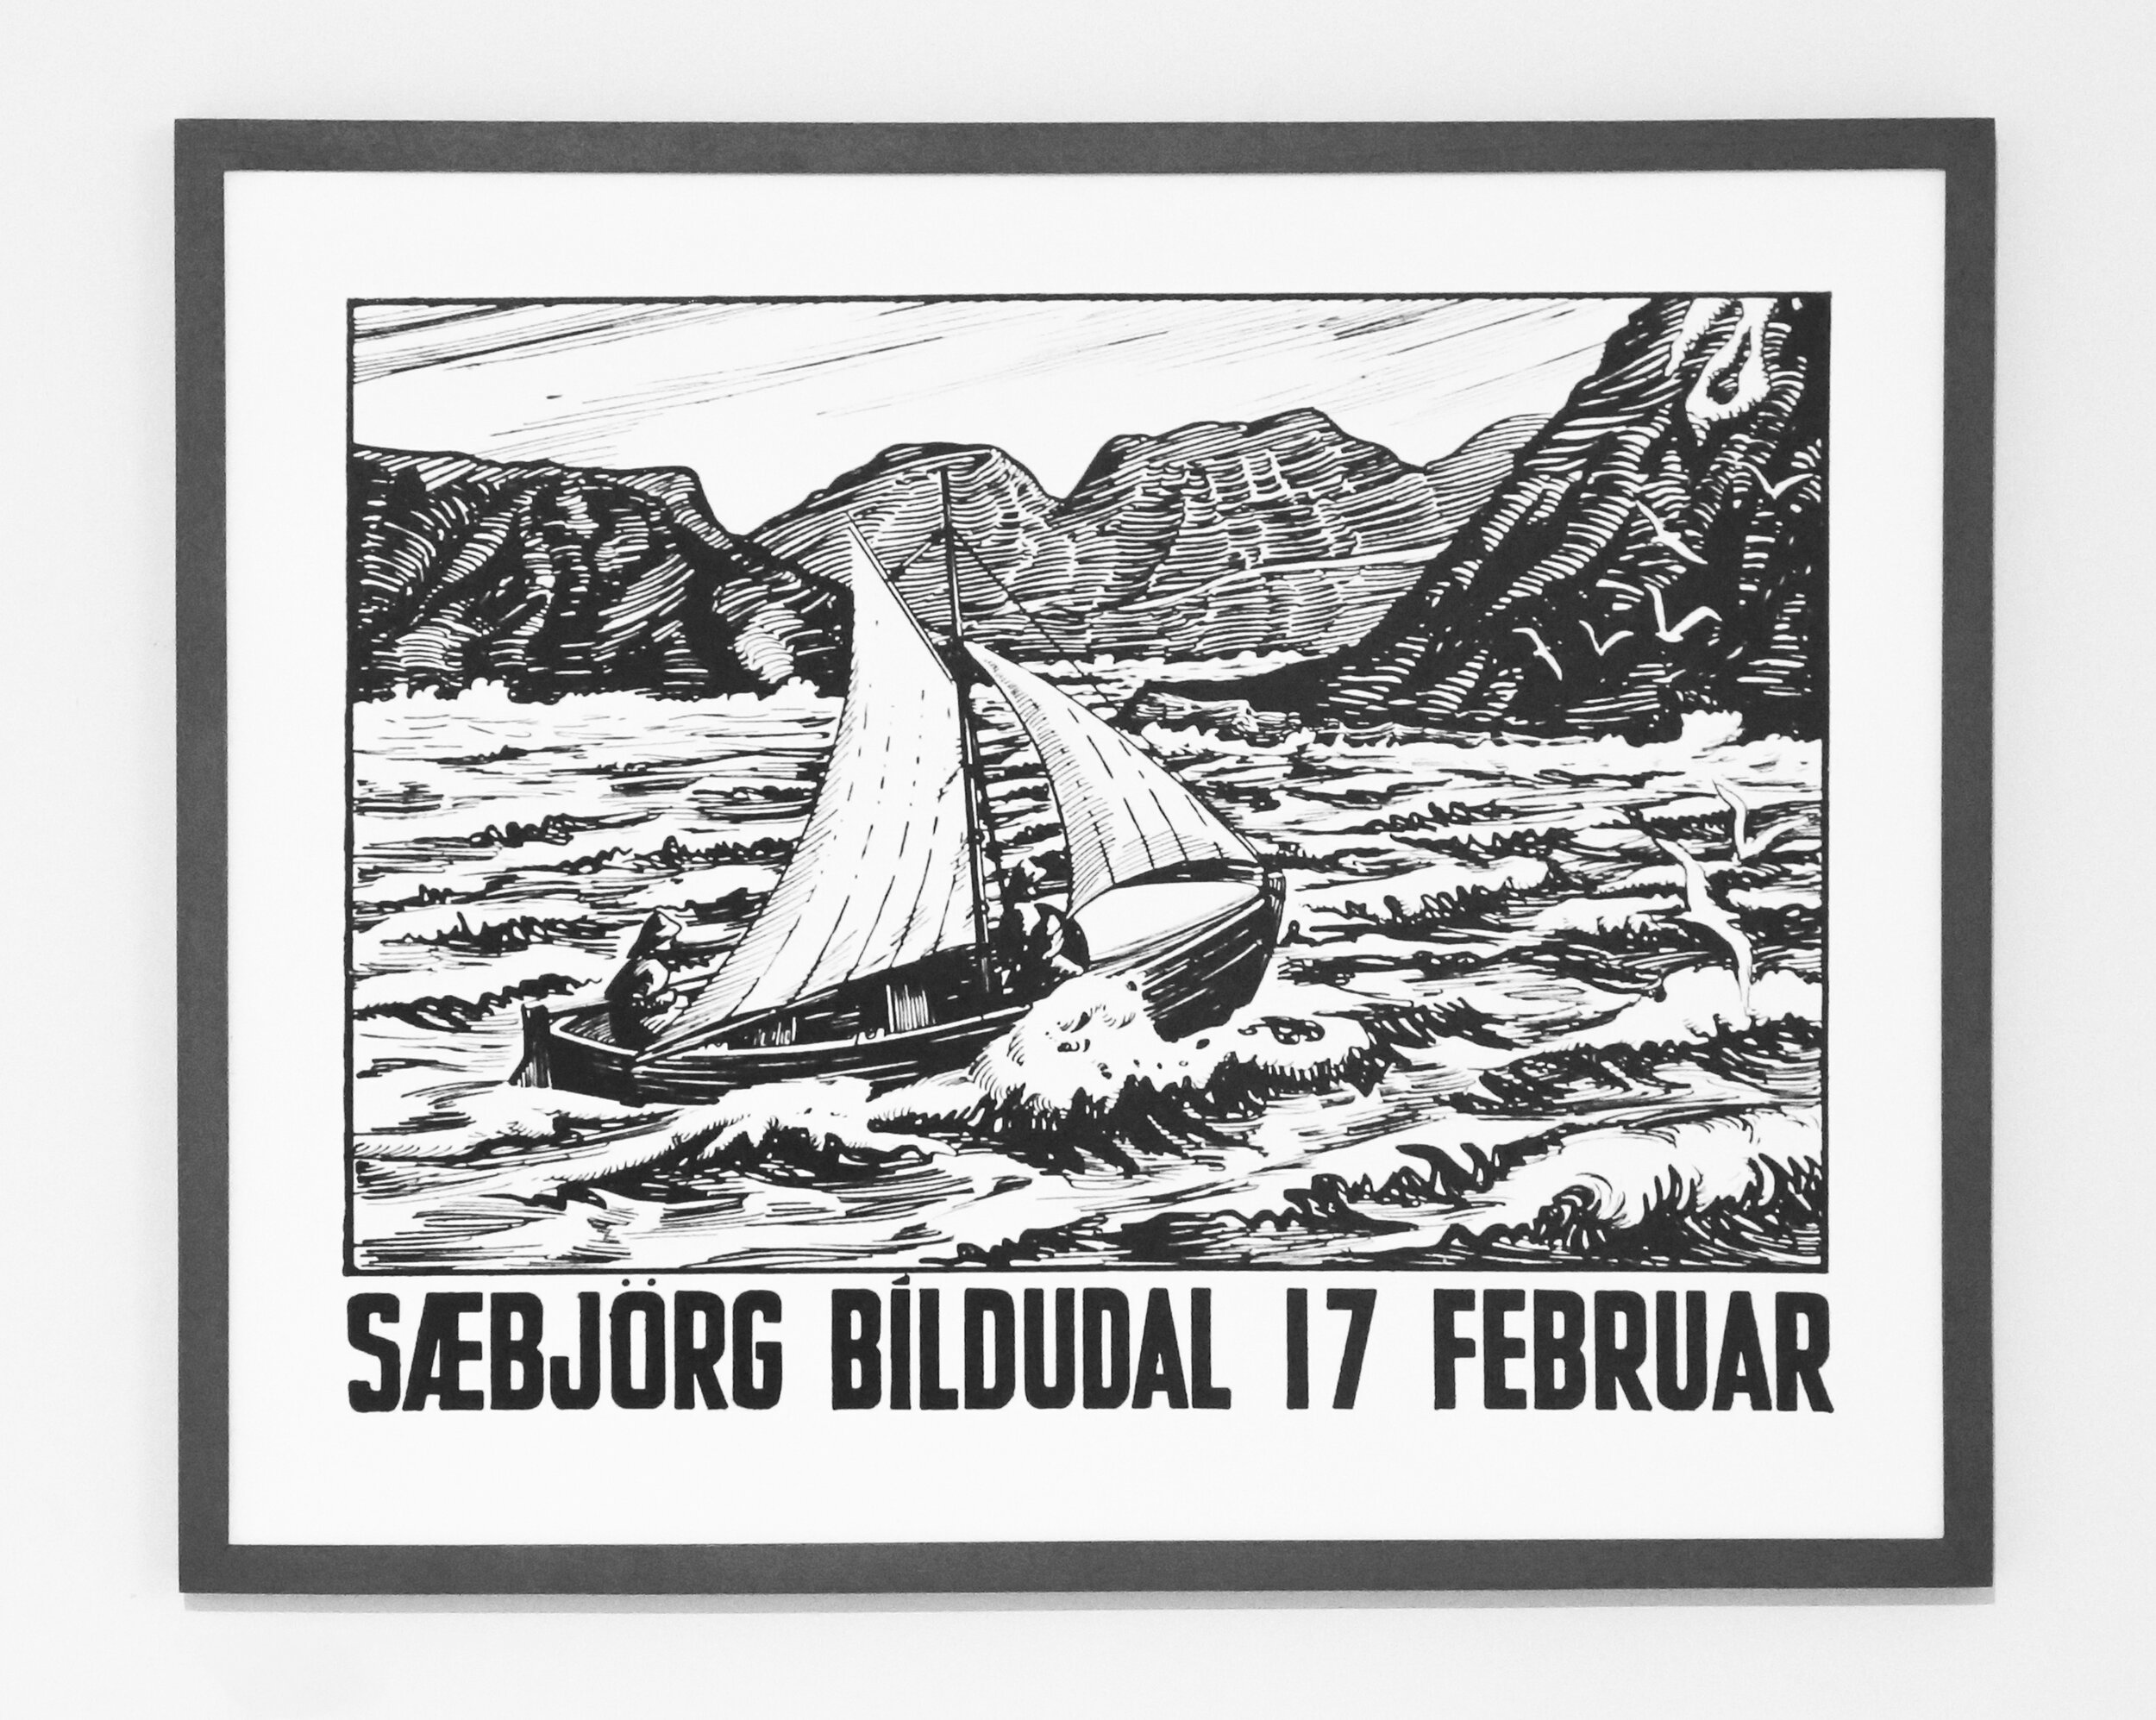  Sæbjörg  Inkjet Print on Silk Paper, 16 x 20 in., 2018 